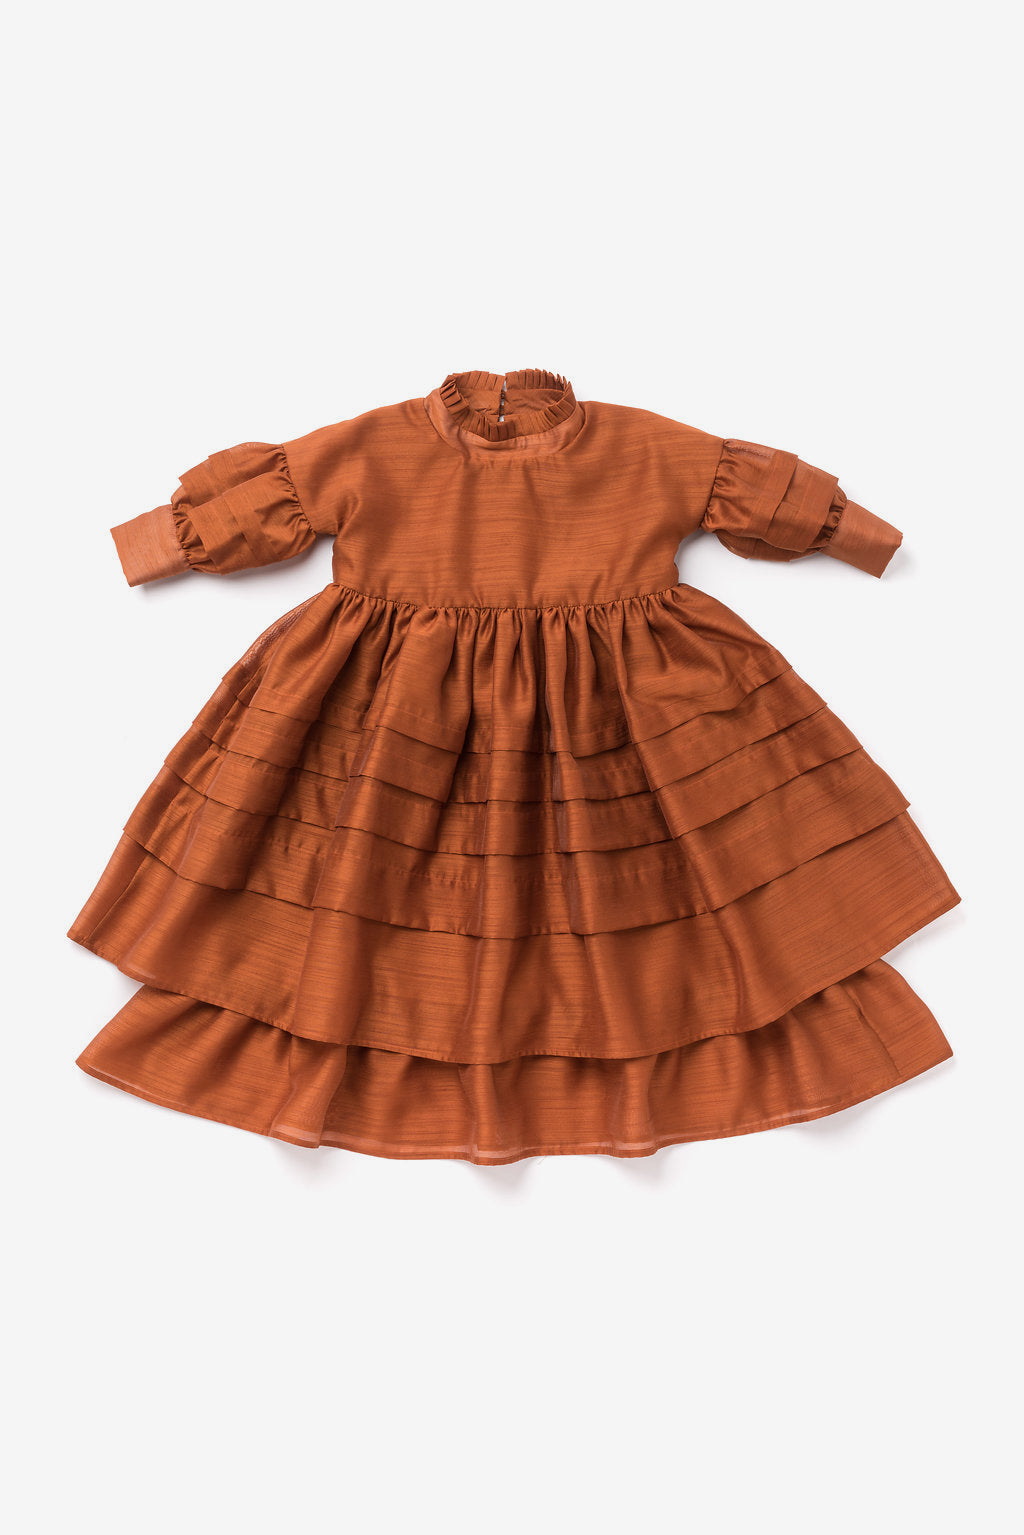 OMAMImini Layered Voile Girls Dress - Rust (Size 4 left) – Mini Ruby